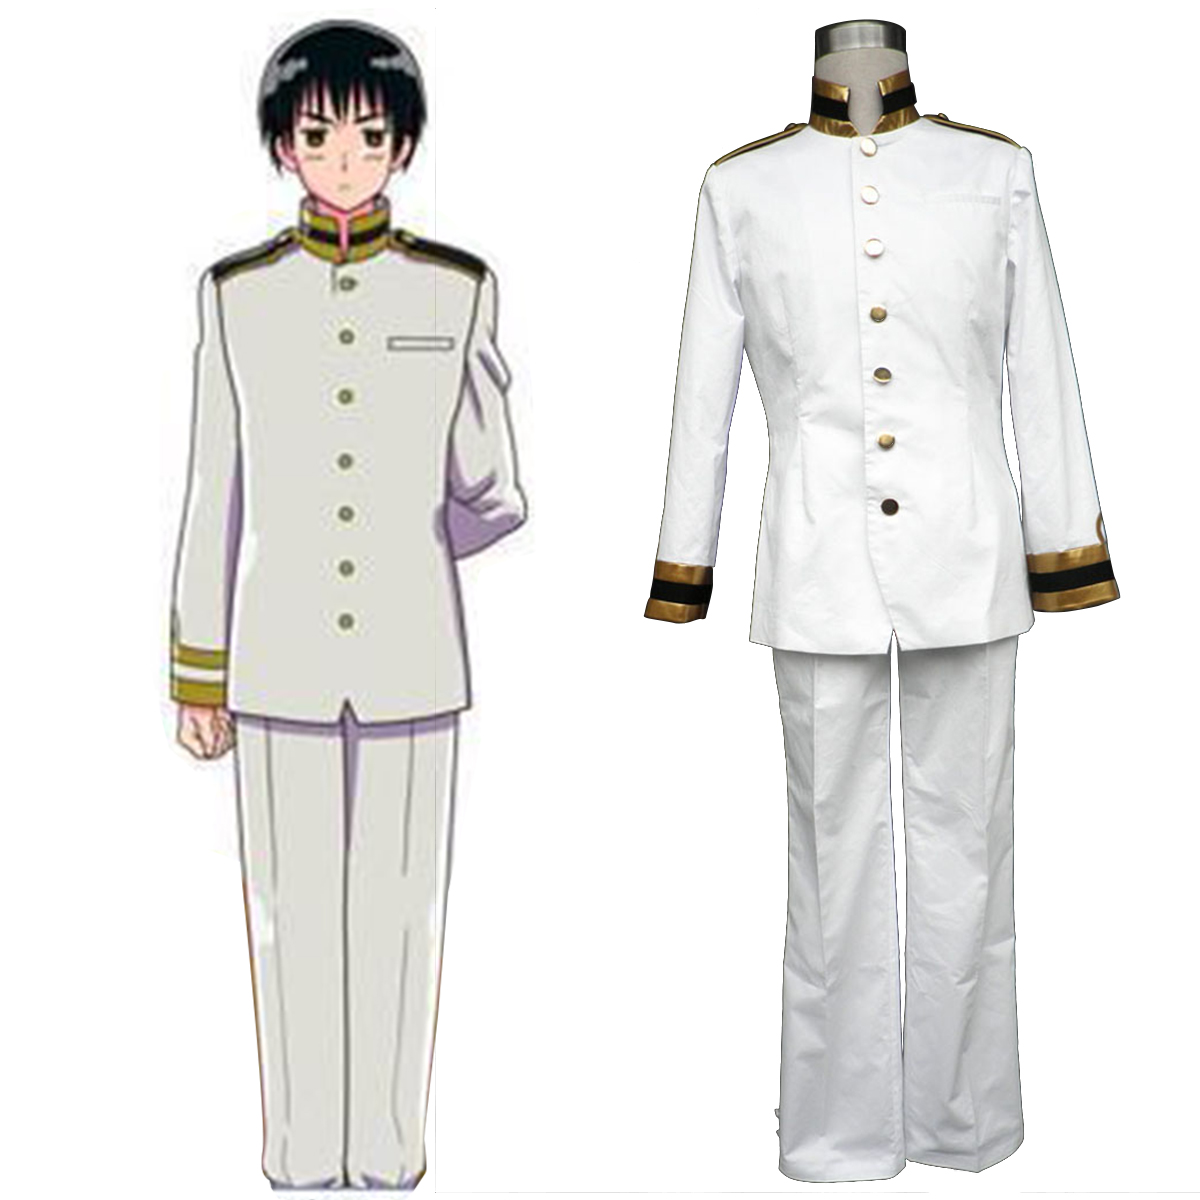 Axis Powers Hetalia Japan Honda Kiku 1 Anime Cosplay Costumes Outfit